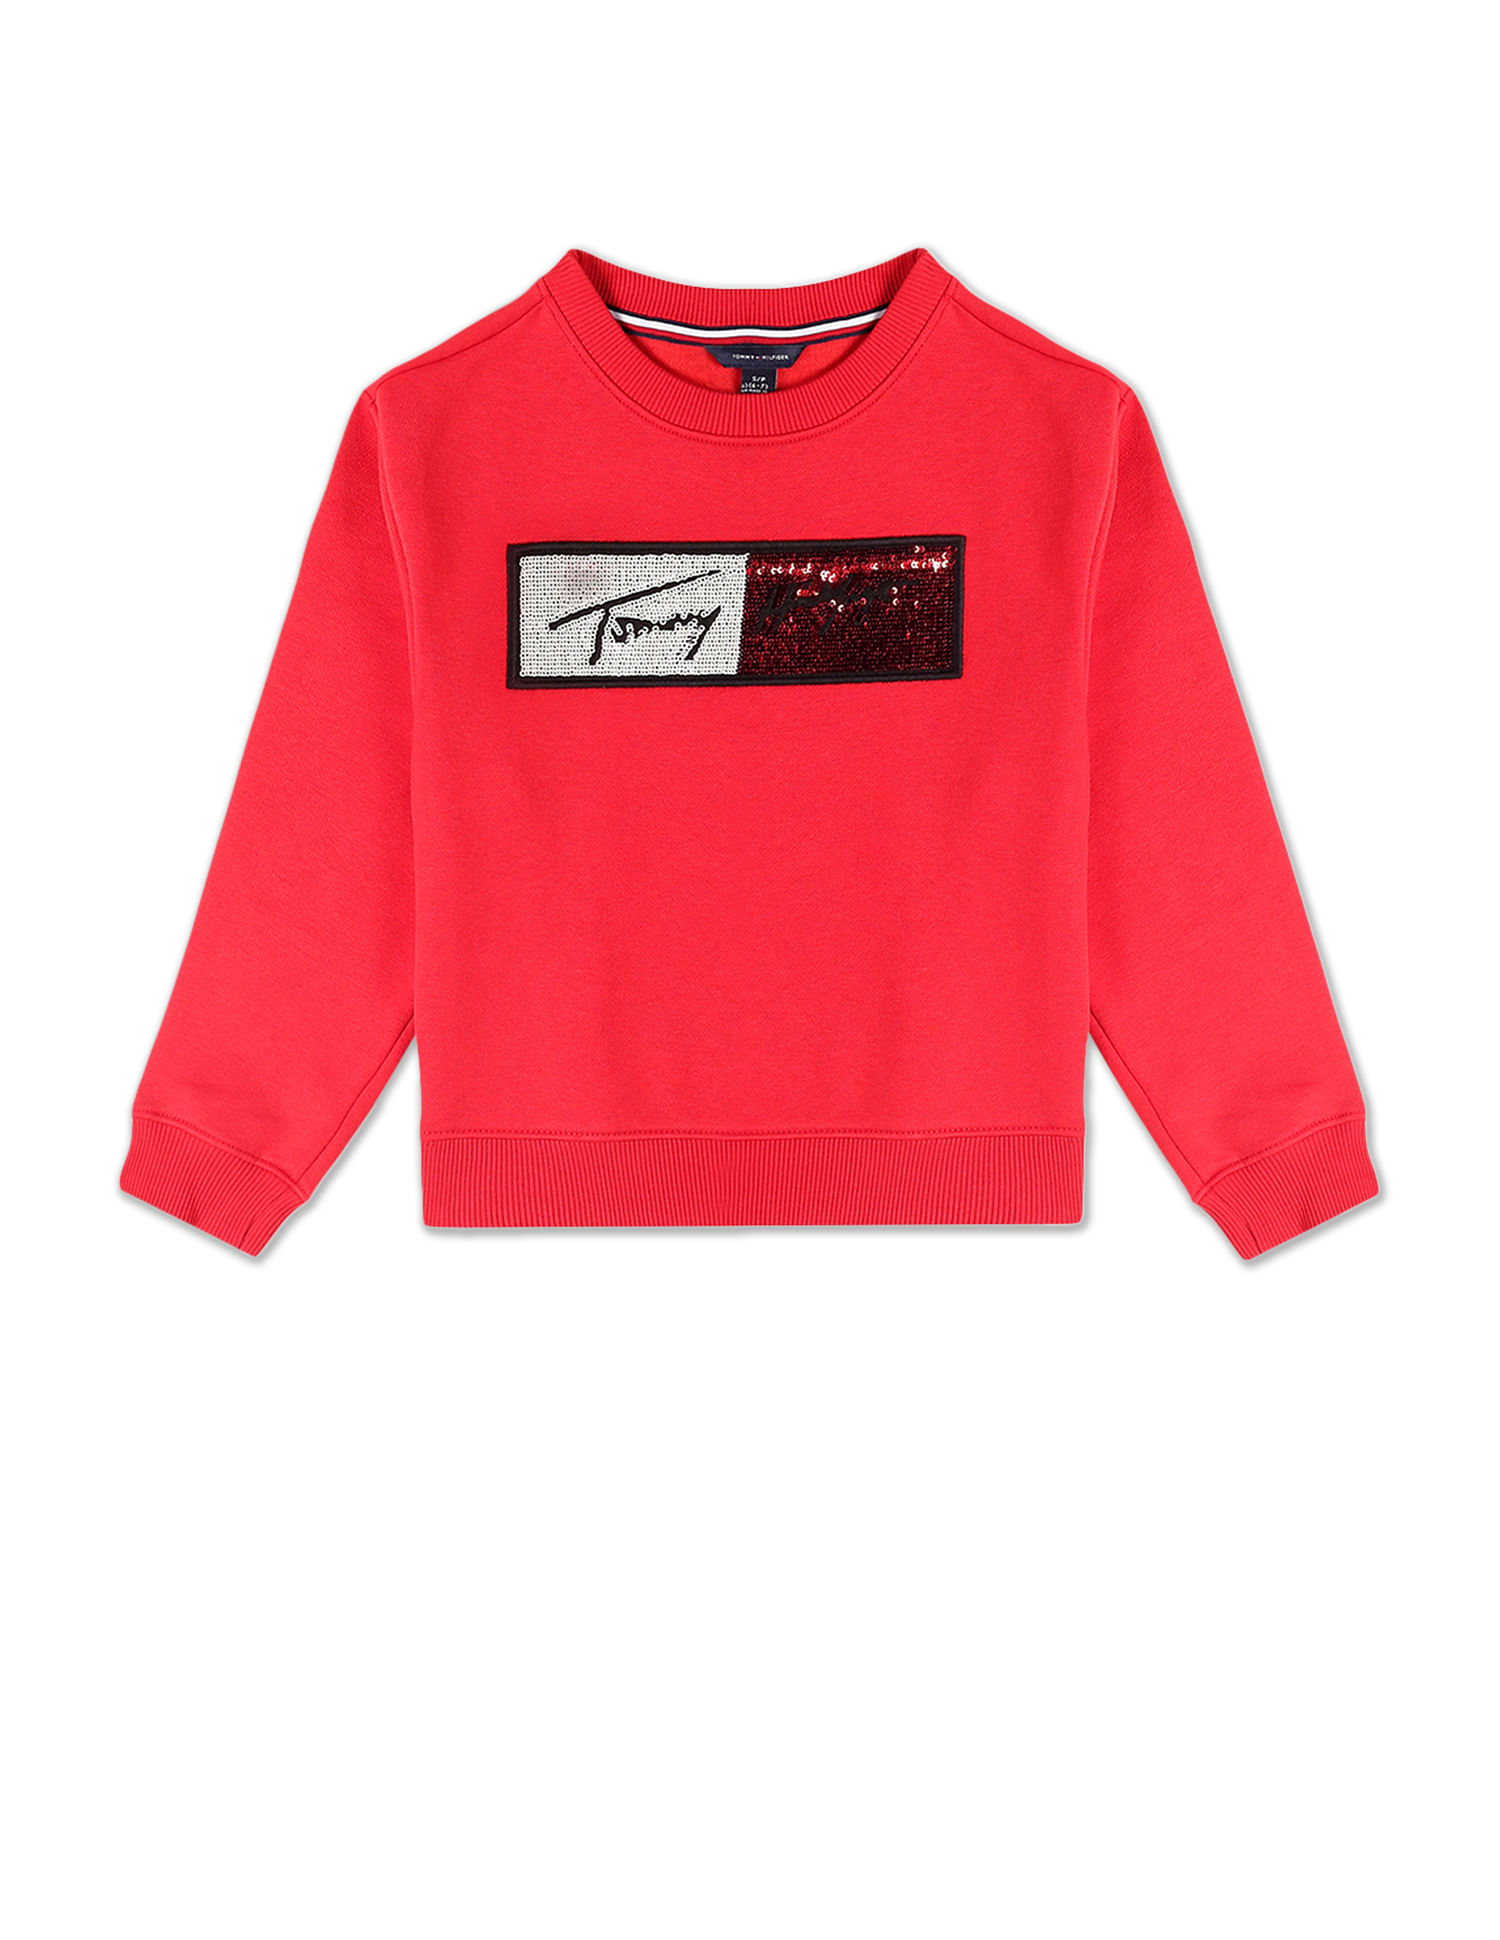 Tommy Hilfiger Red Signature Large Front Logo Crew Neck Sweatshirt